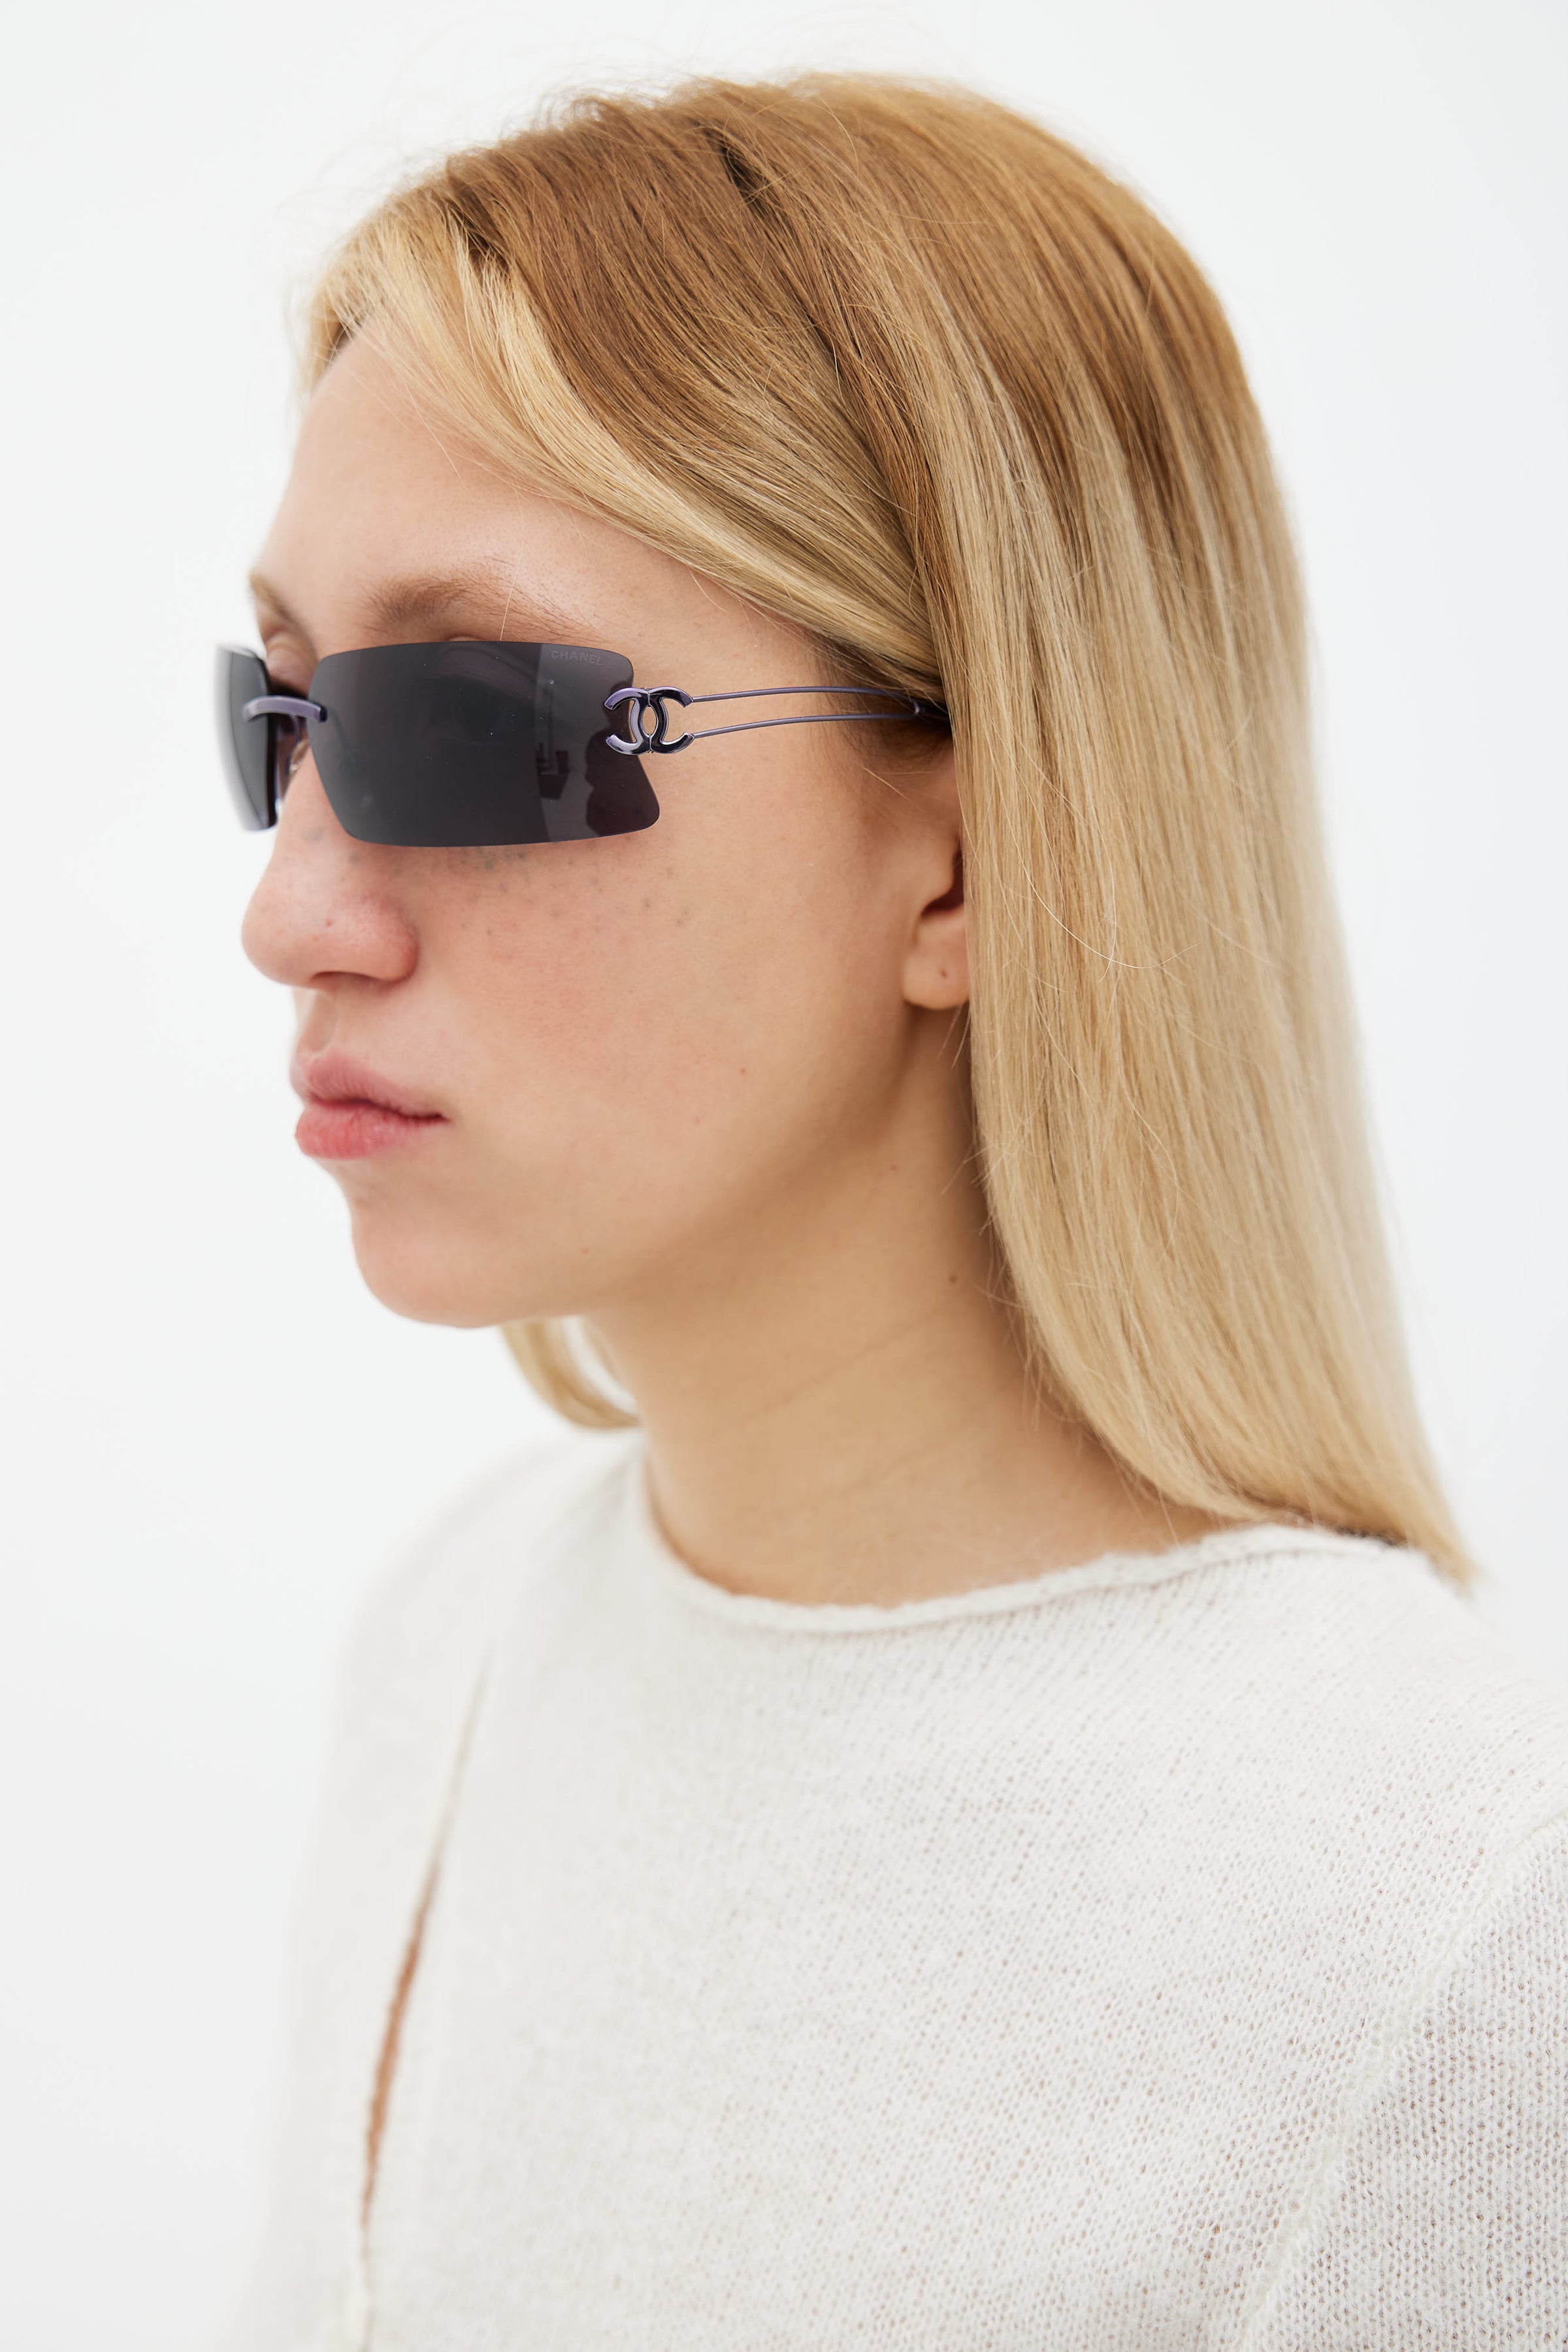 Chanel Chanel Rimless Sunglasses